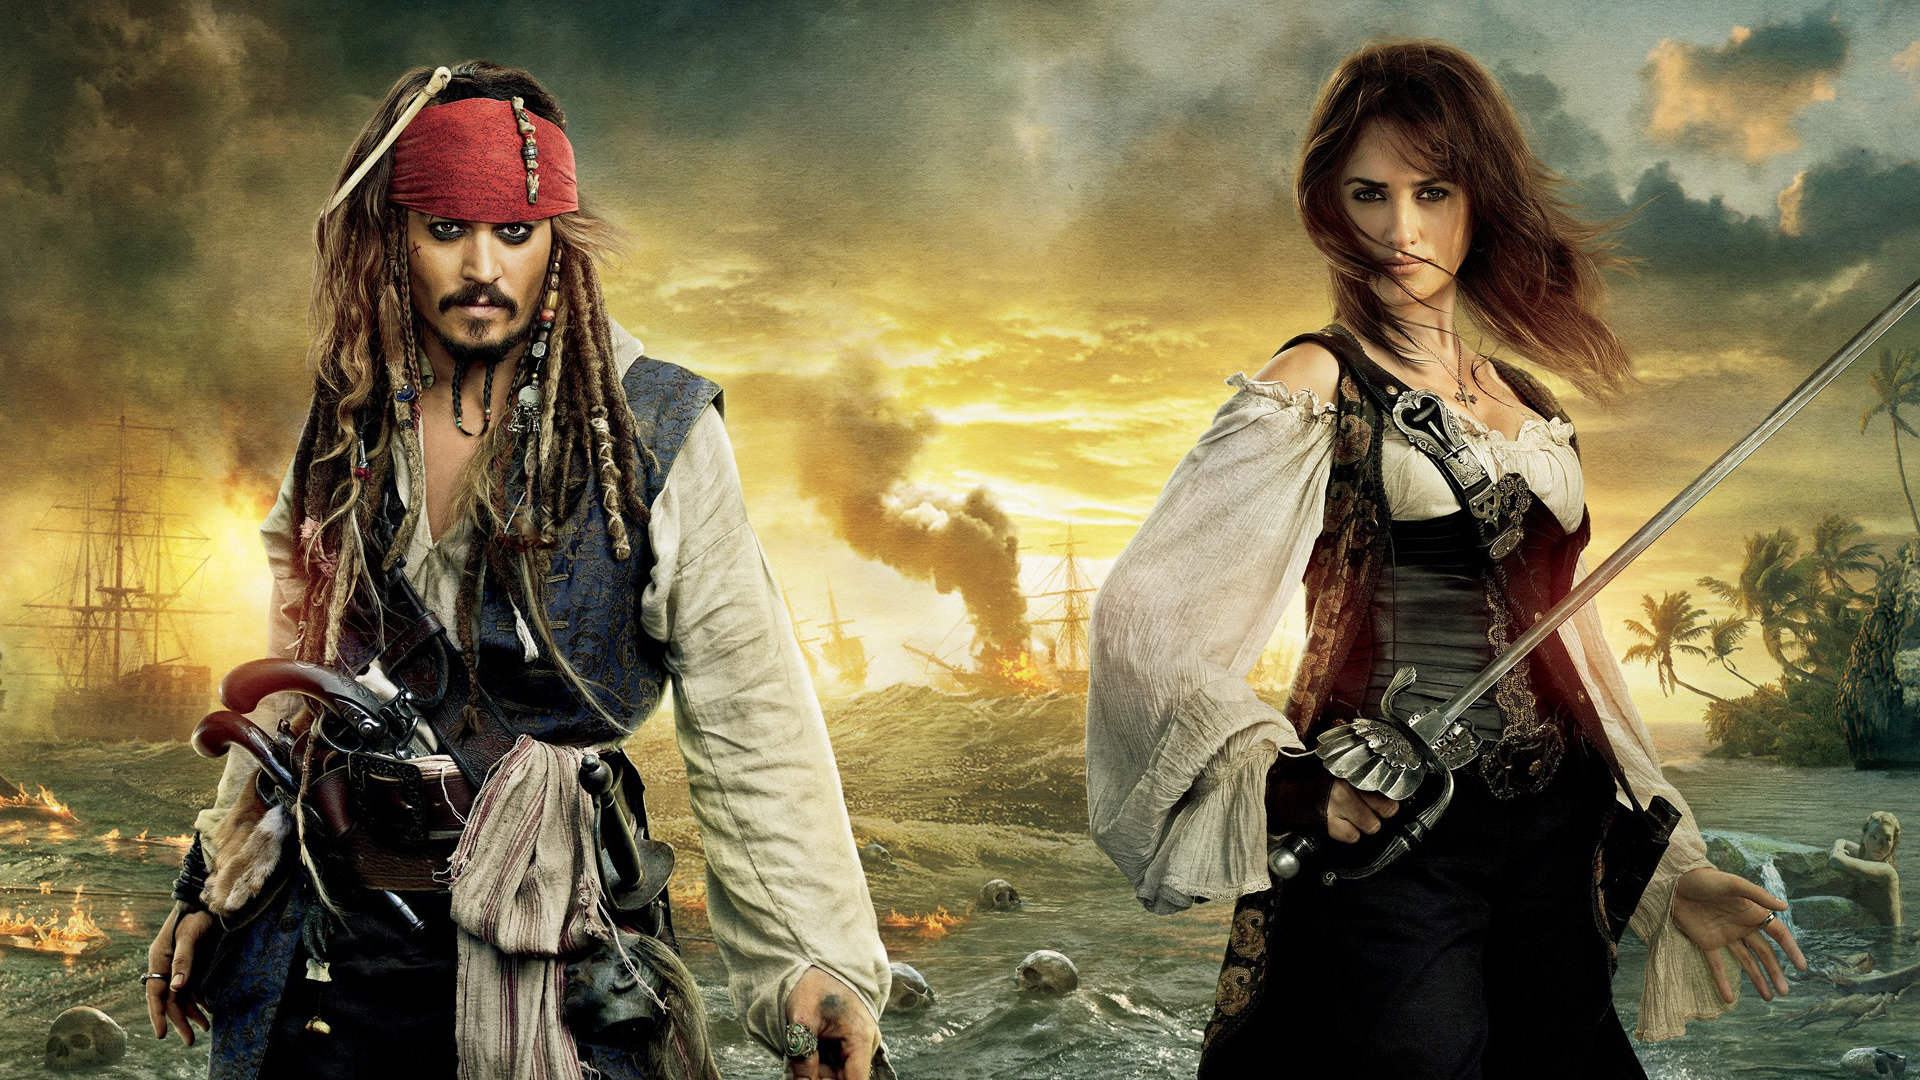 Captain Jack Sparrow wallpapers 1920x1080 Full HD (1080p) desktop  backgrounds